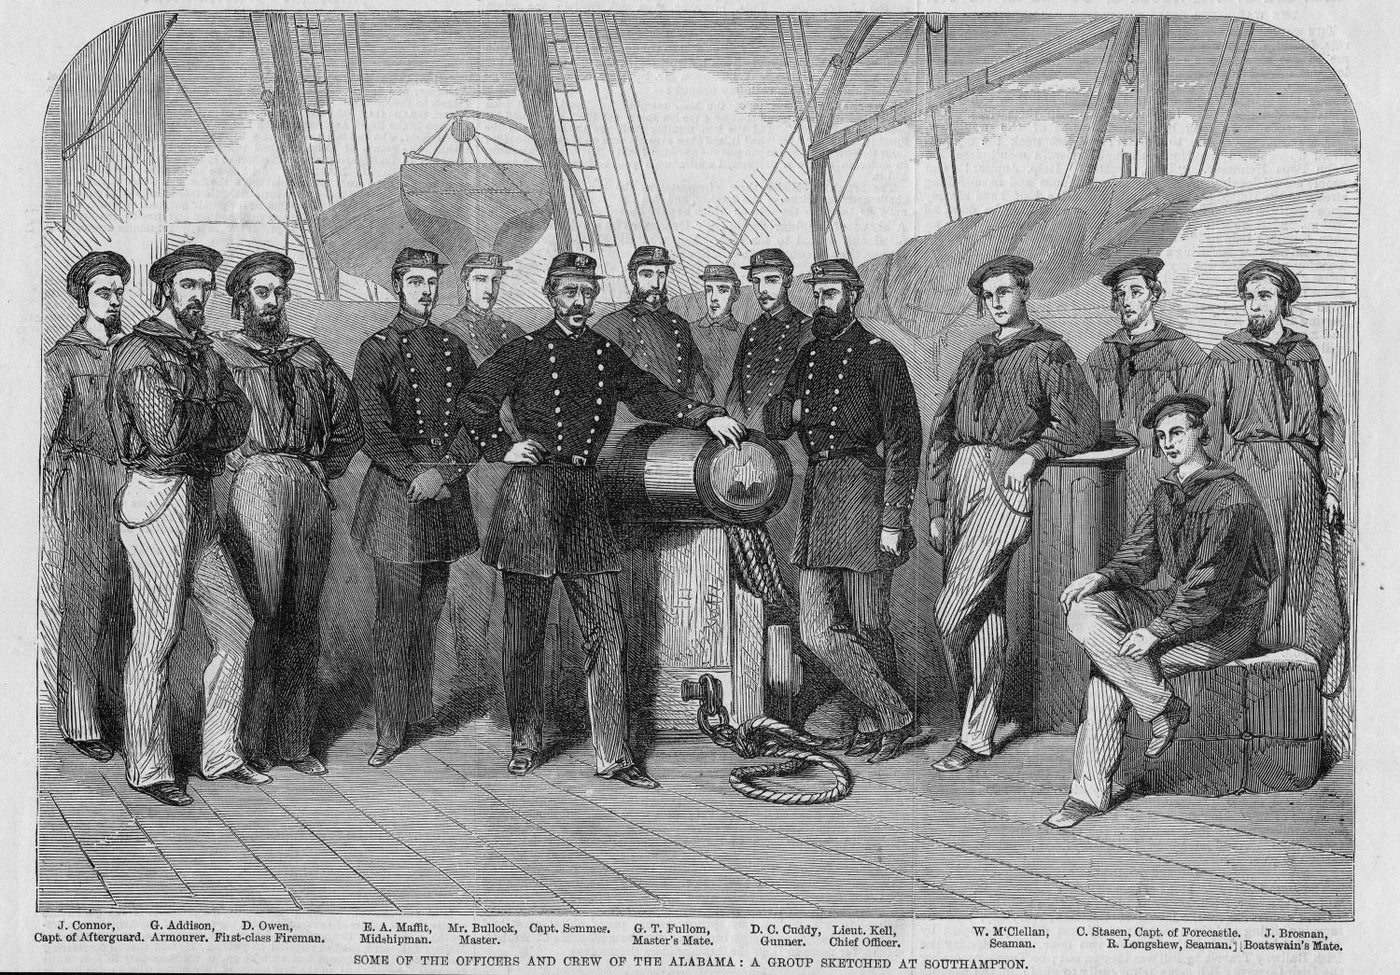 CSS Alabama crew sketched at Southampton England antique print.